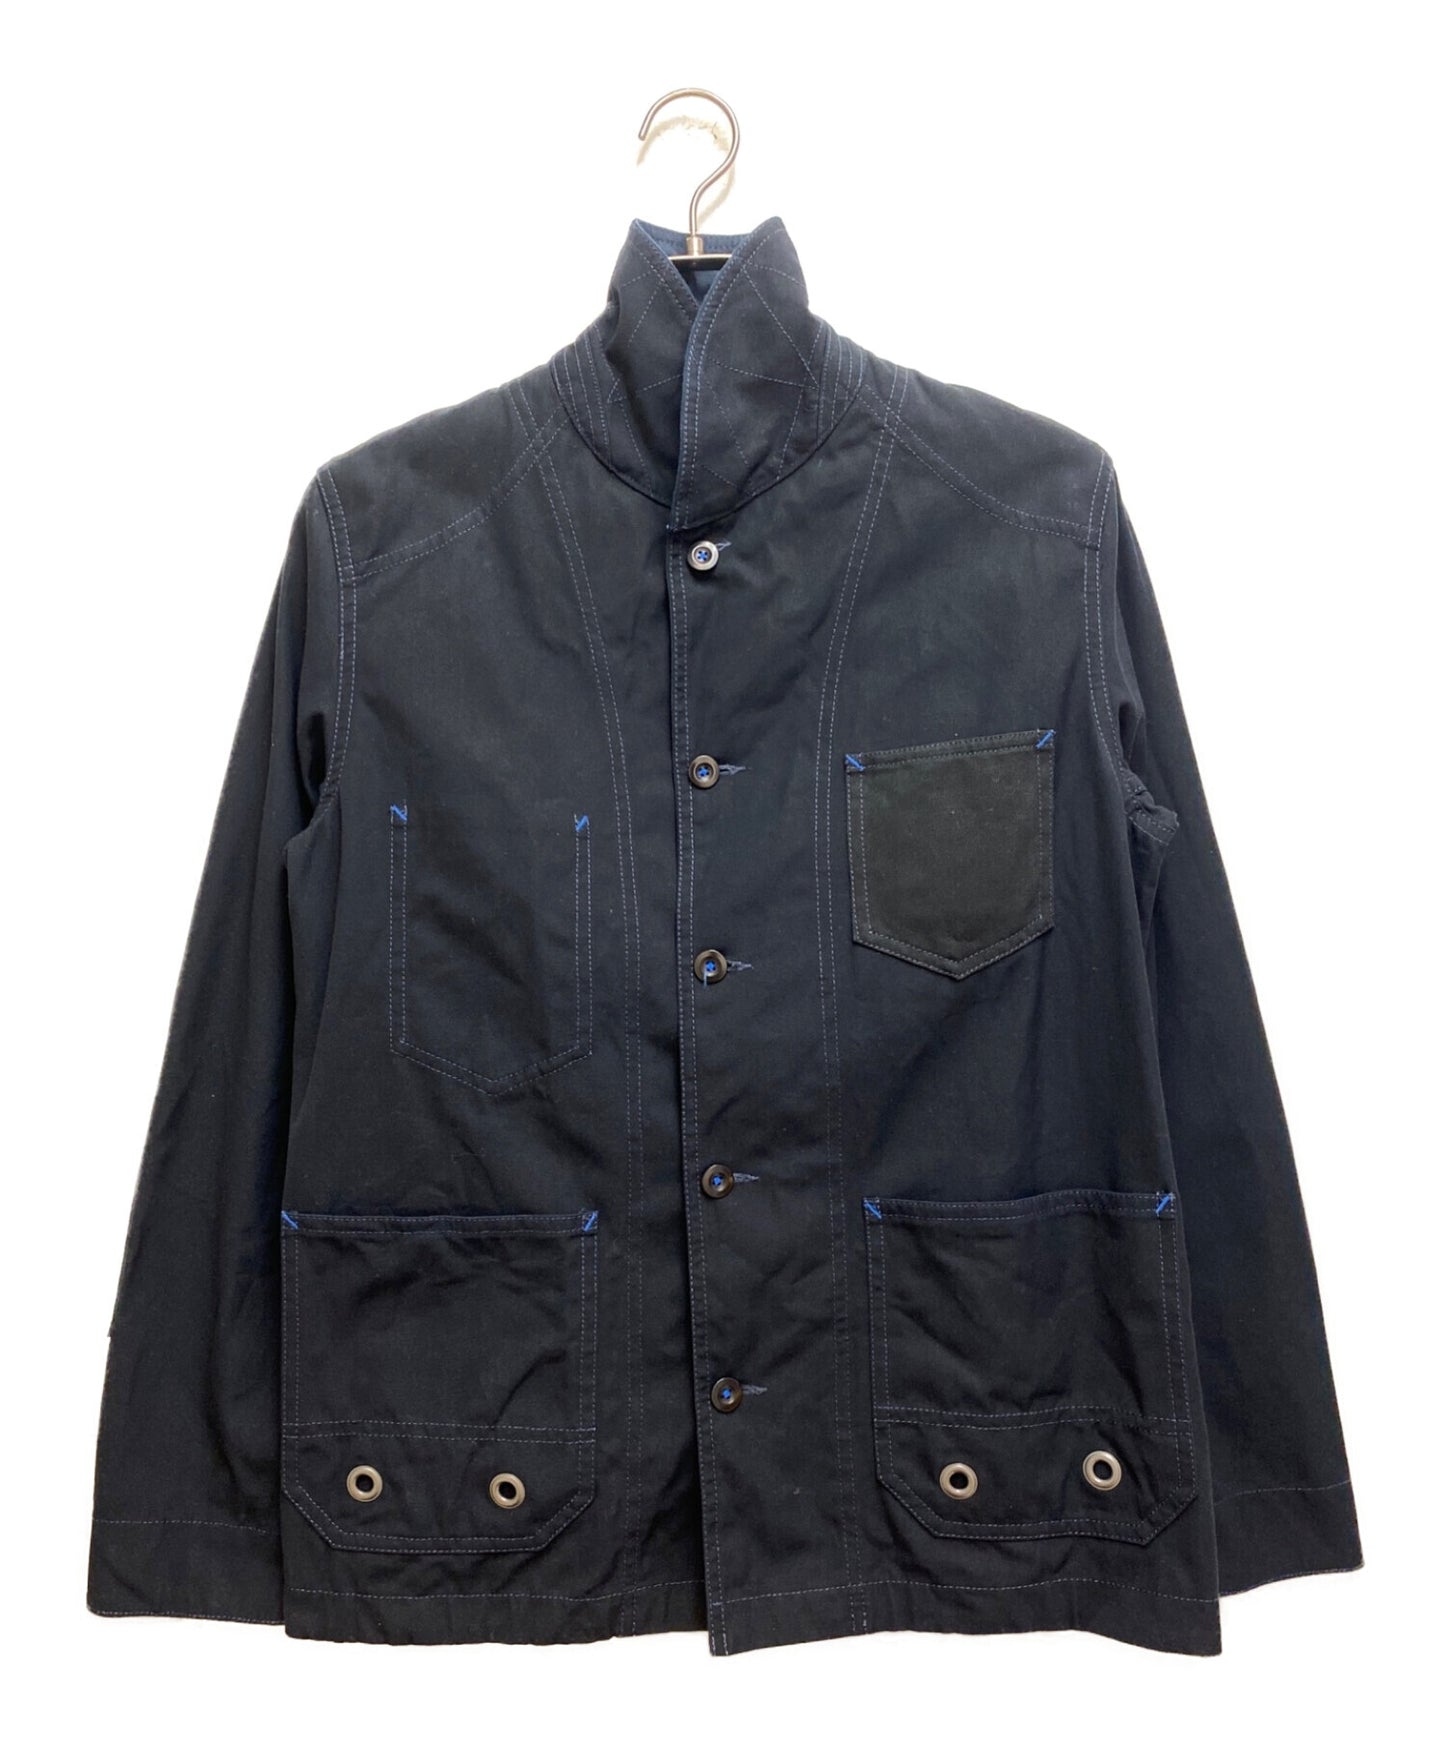 [Pre-owned] eYe COMME des GARCONS JUNYAWATANABE MAN shawl collar jacket WG-J909/AD2020